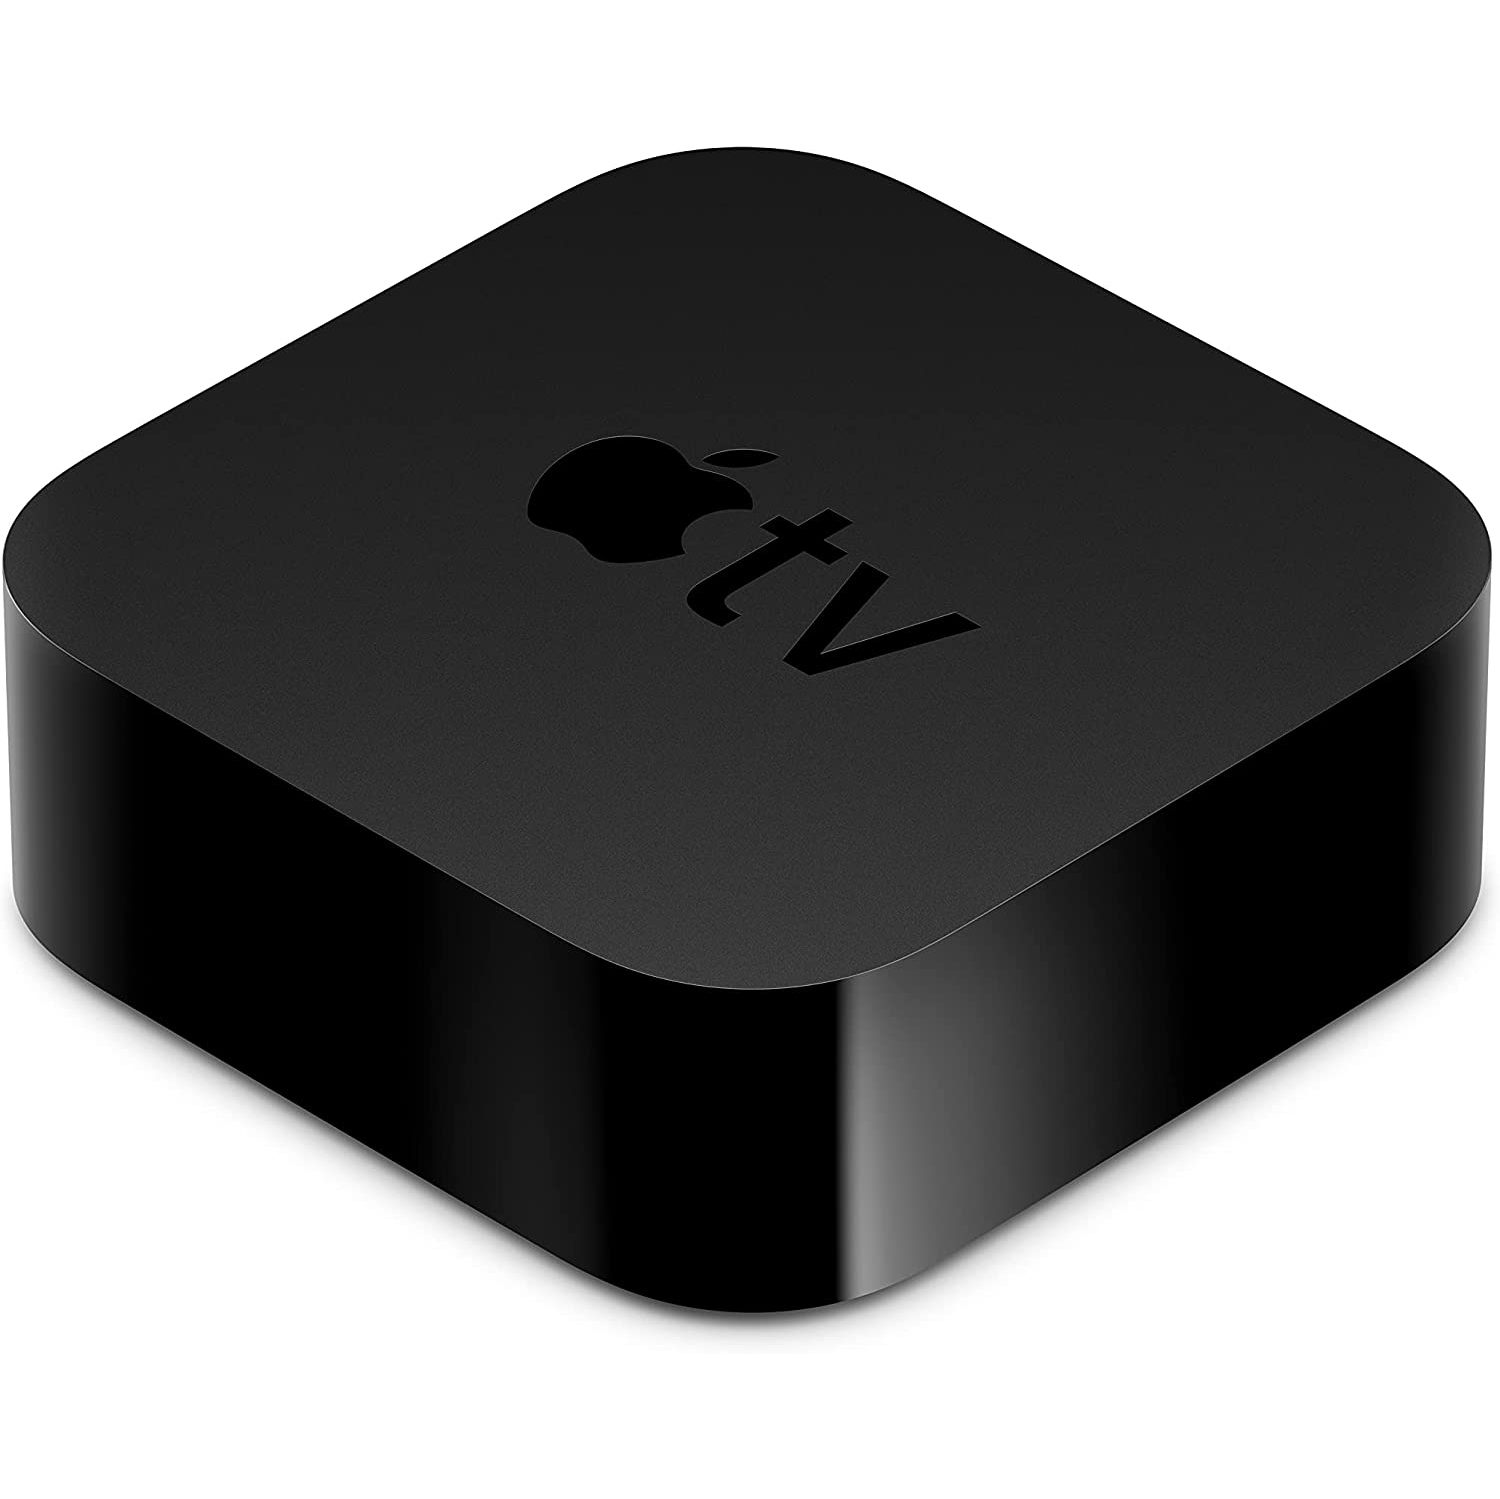 2021 Apple TV 4K (32GB) (MXGY2LL/A) | Best Buy Canada